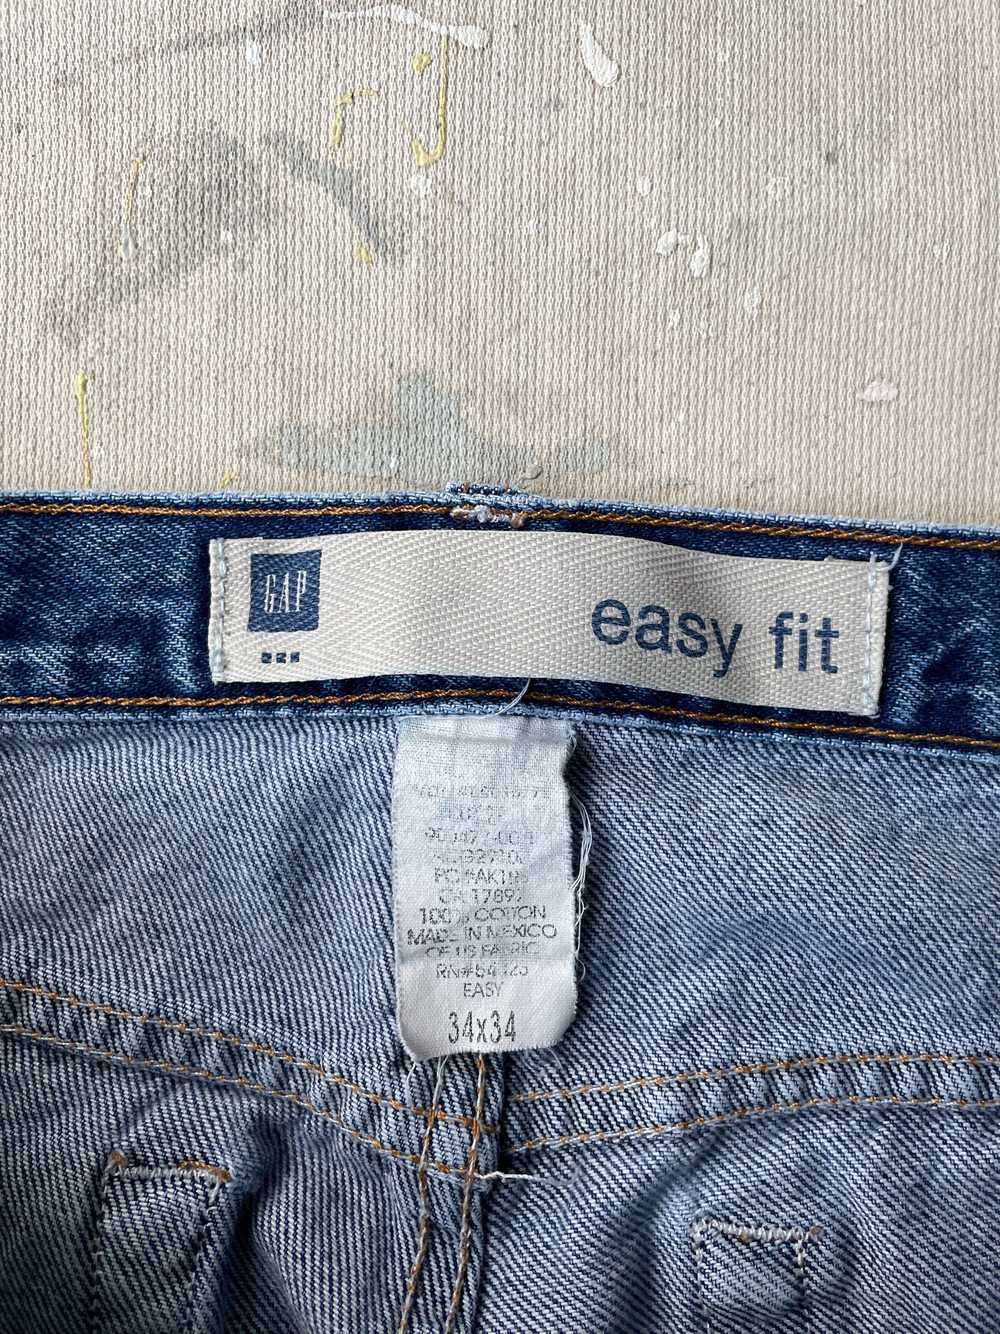 GAP Medium Wash Blue Jeans—[32x33] - image 4